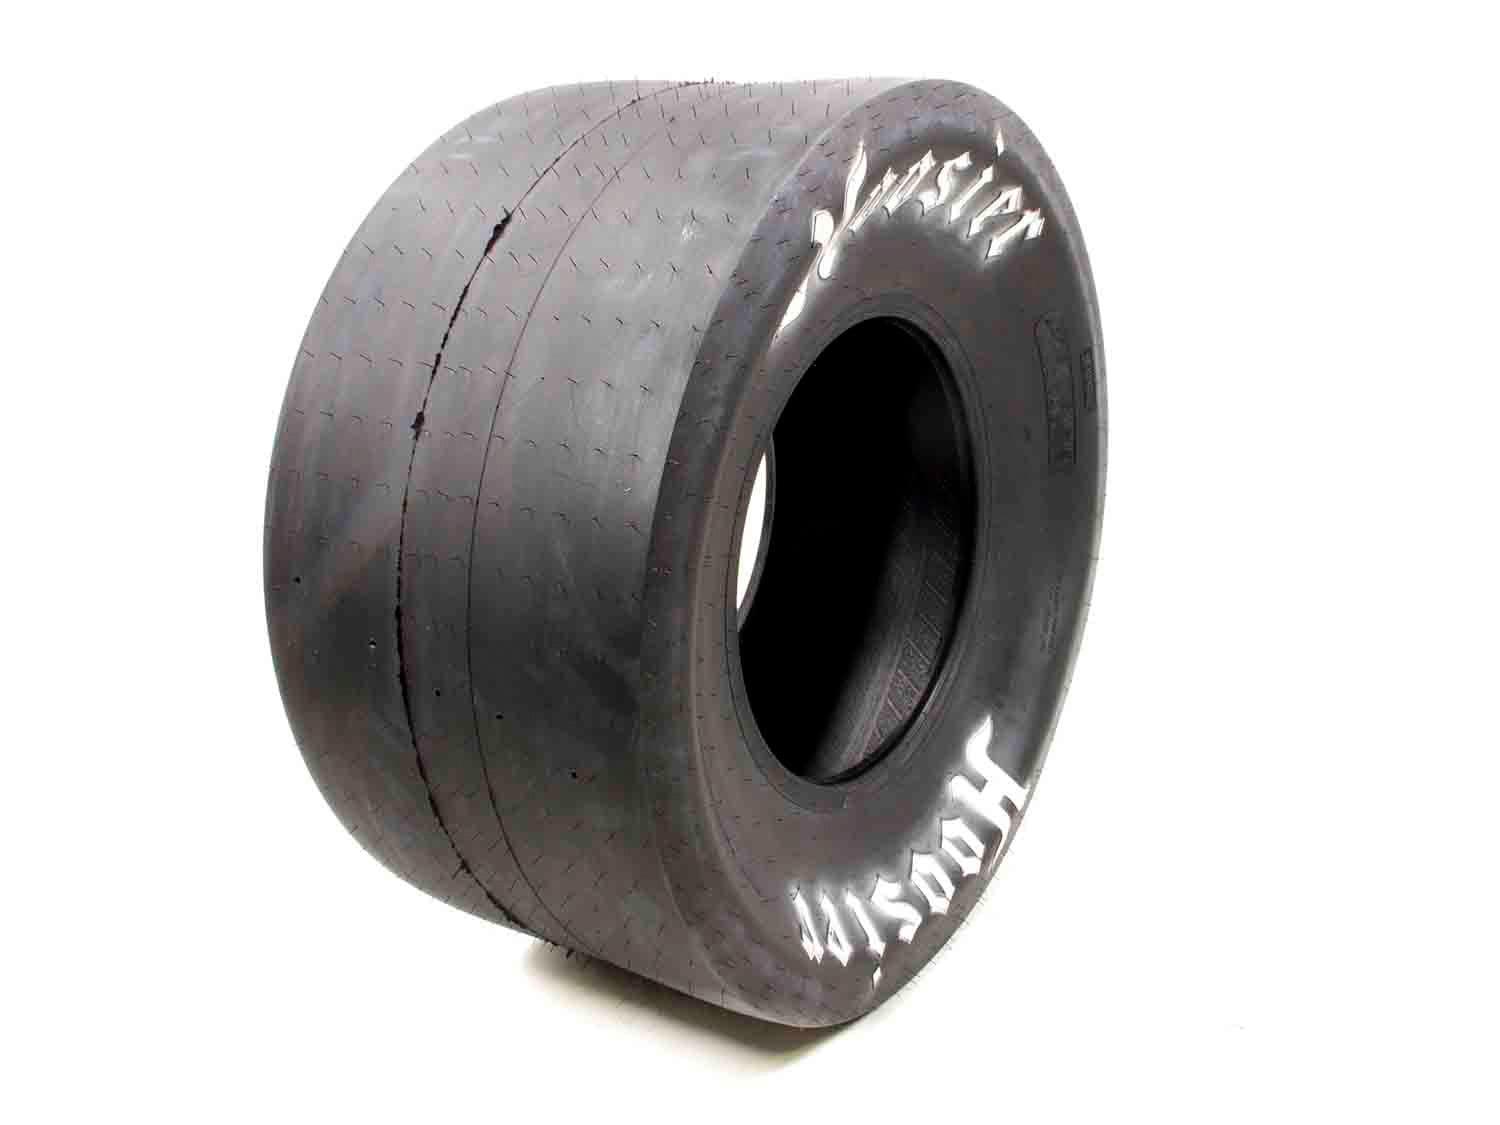 26.0/10.0-15 Drag Tire - Burlile Performance Products